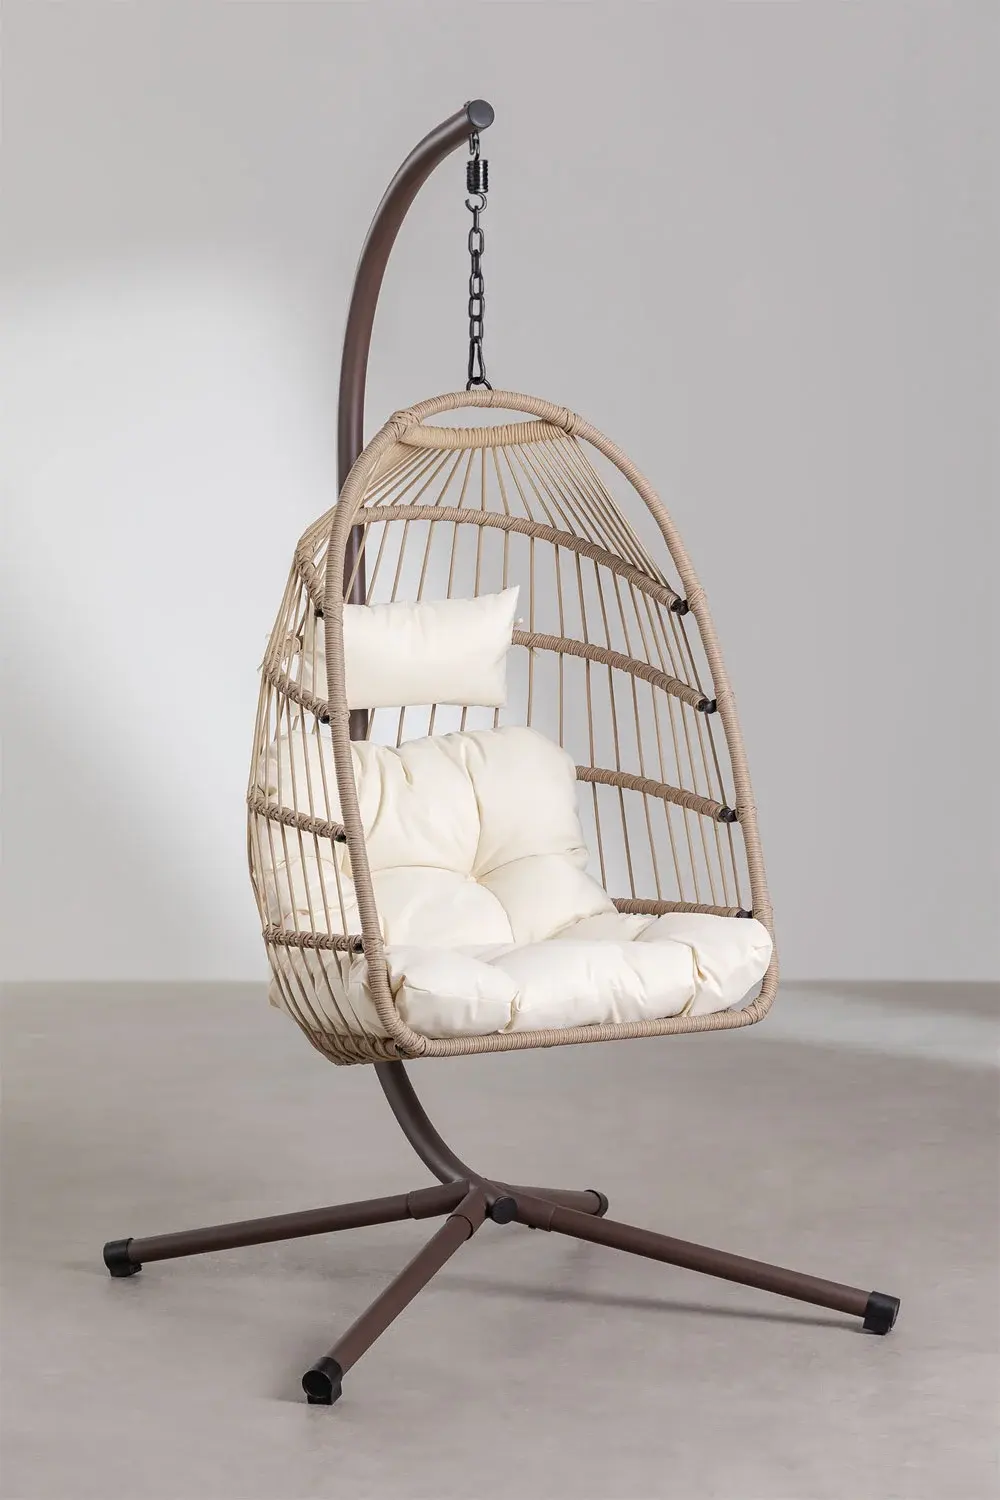 High quality Patio Balcony Leisure Swing Chair KD Folding Rattan Weave Hanging Egg Chair